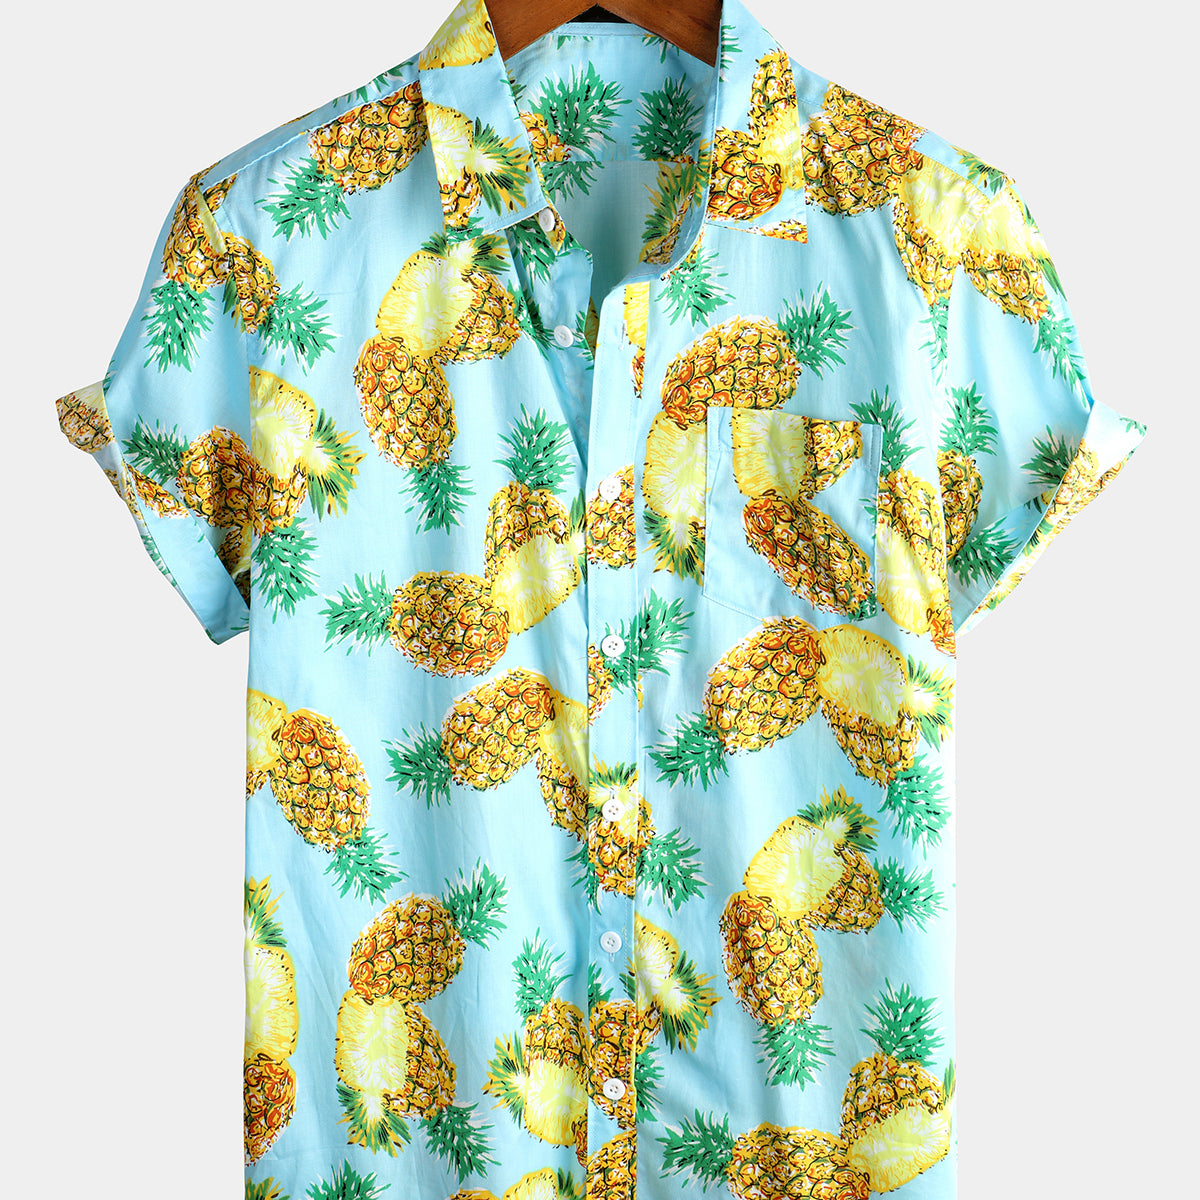 Men's Pink Pineapple Print Holiday Cotton Pocket Shirt